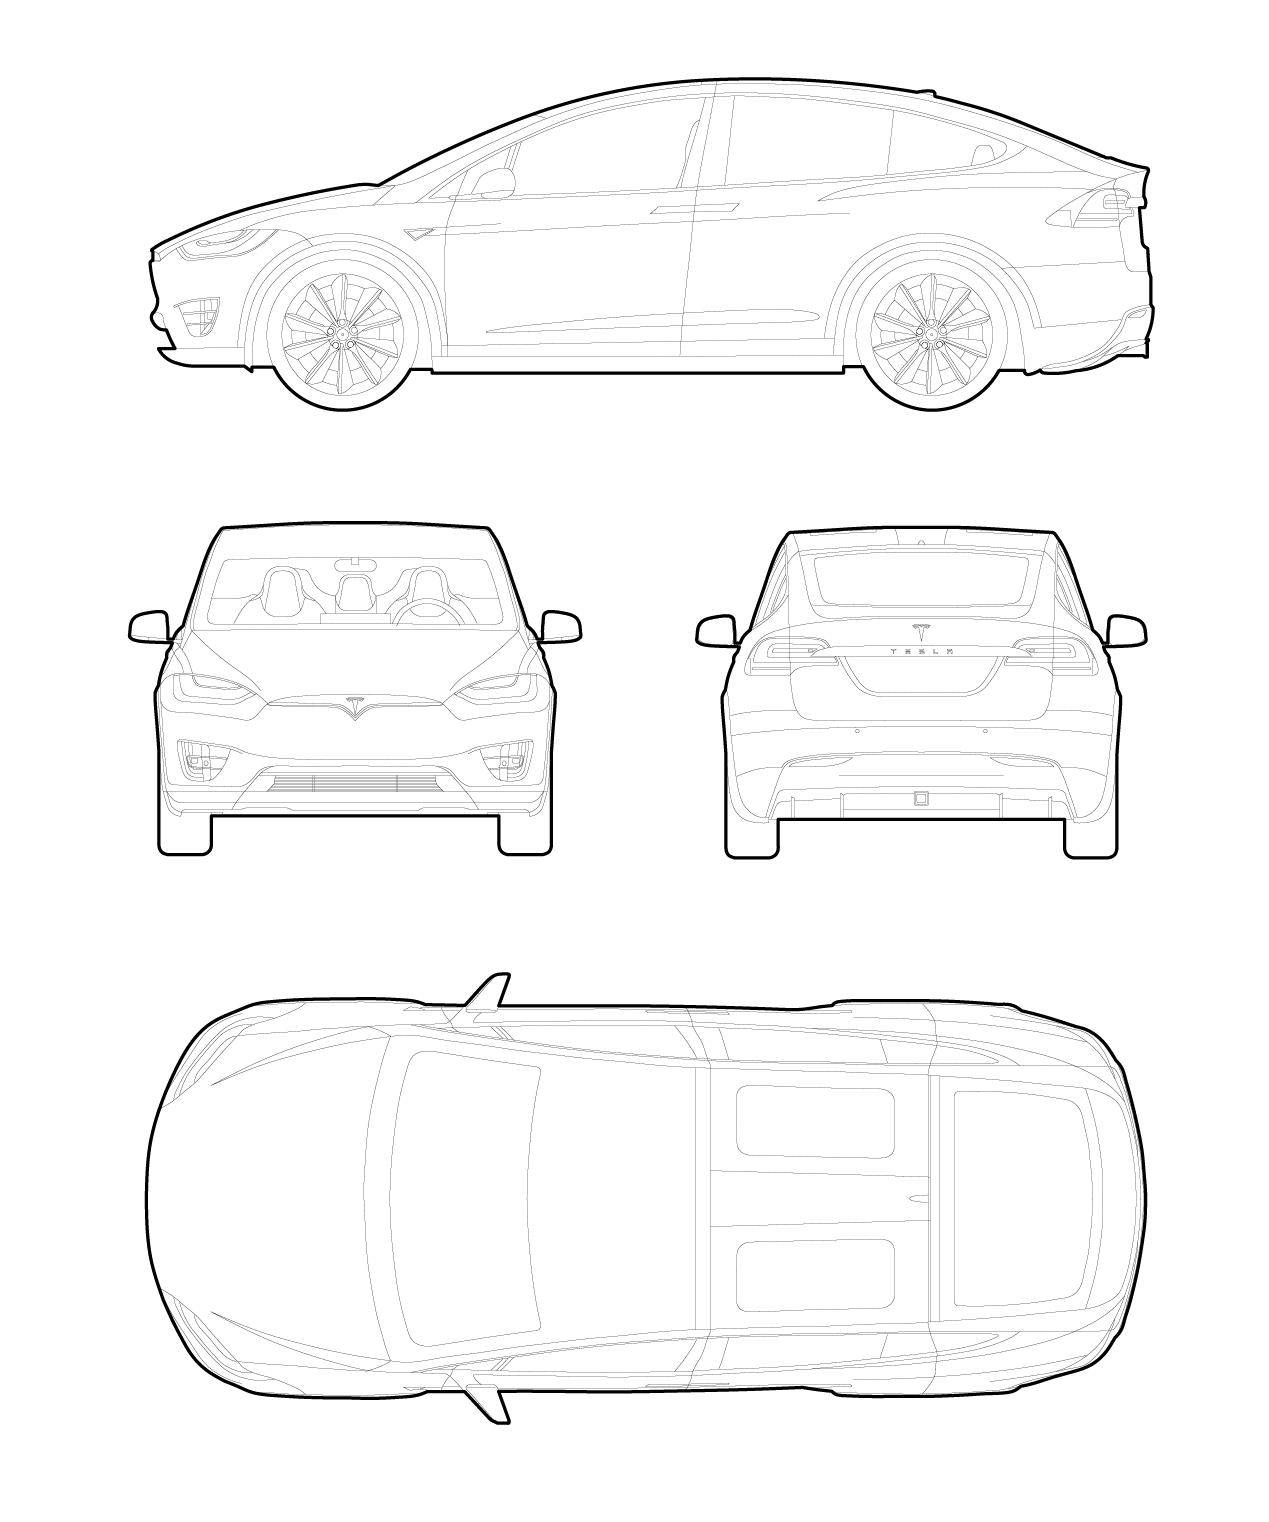 Drawing of a Tesla model X cars dwg